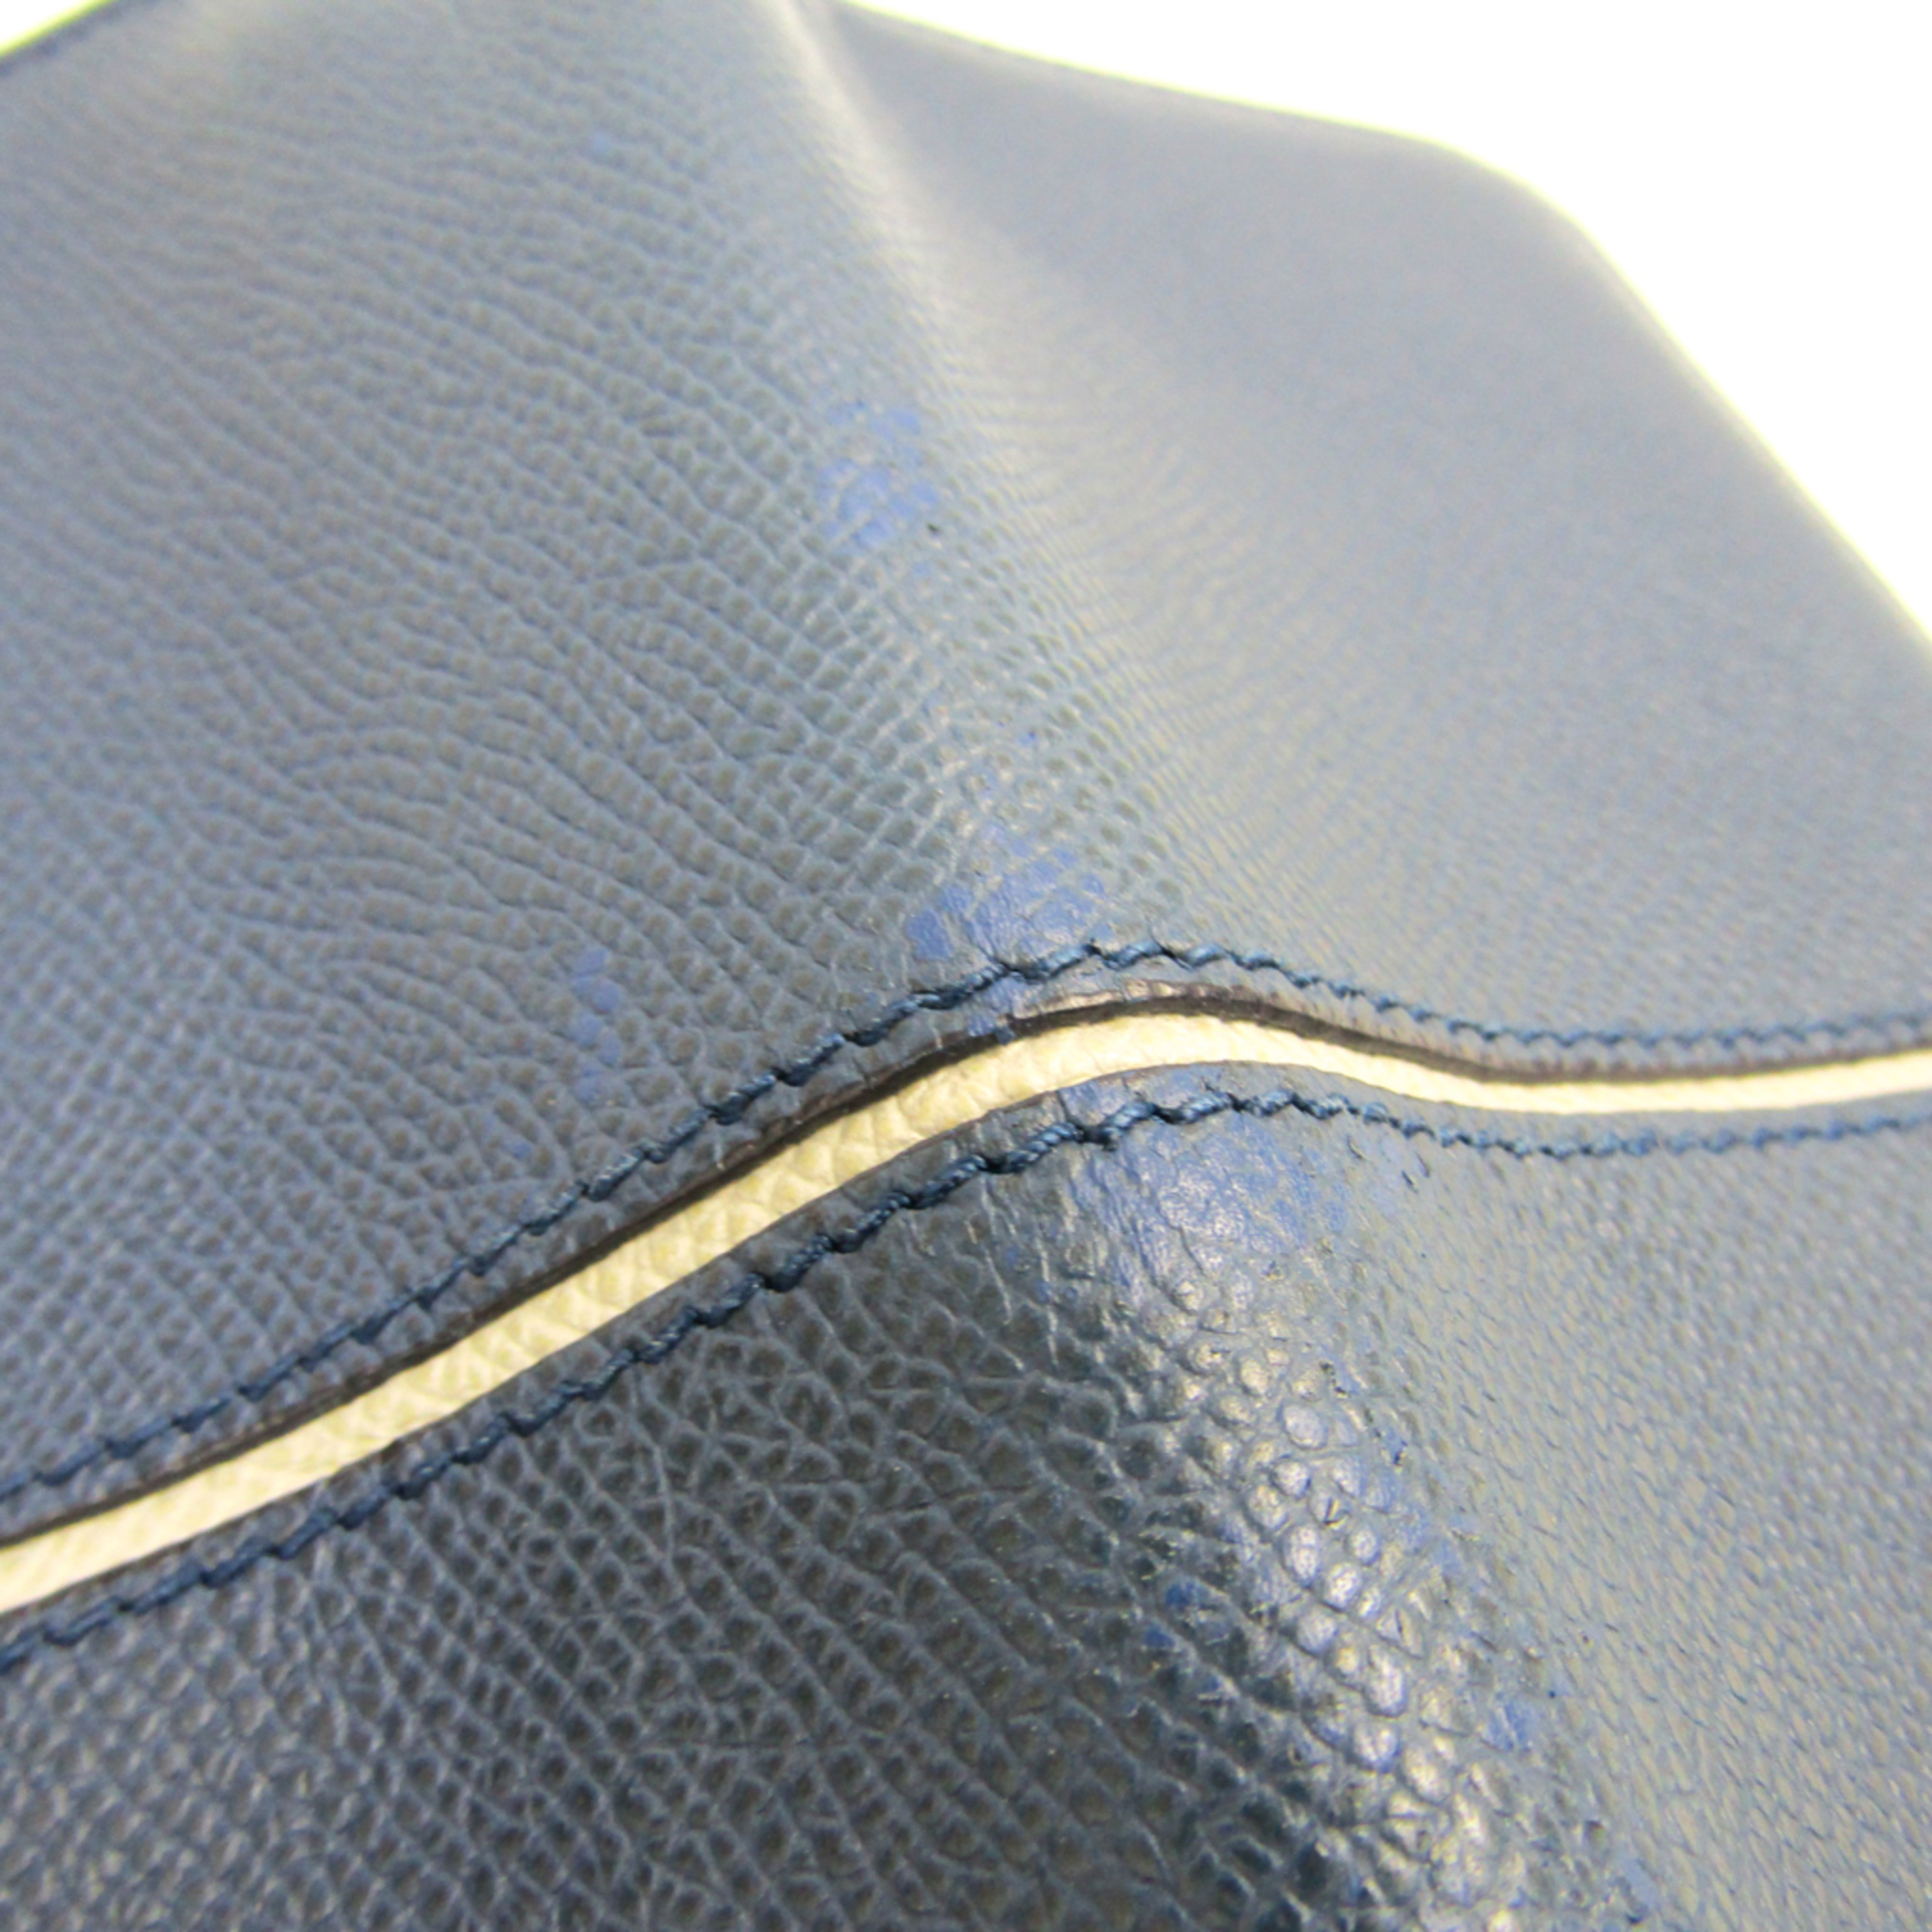 Tod's Men's Leather Long Wallet (bi-fold) Blue,White